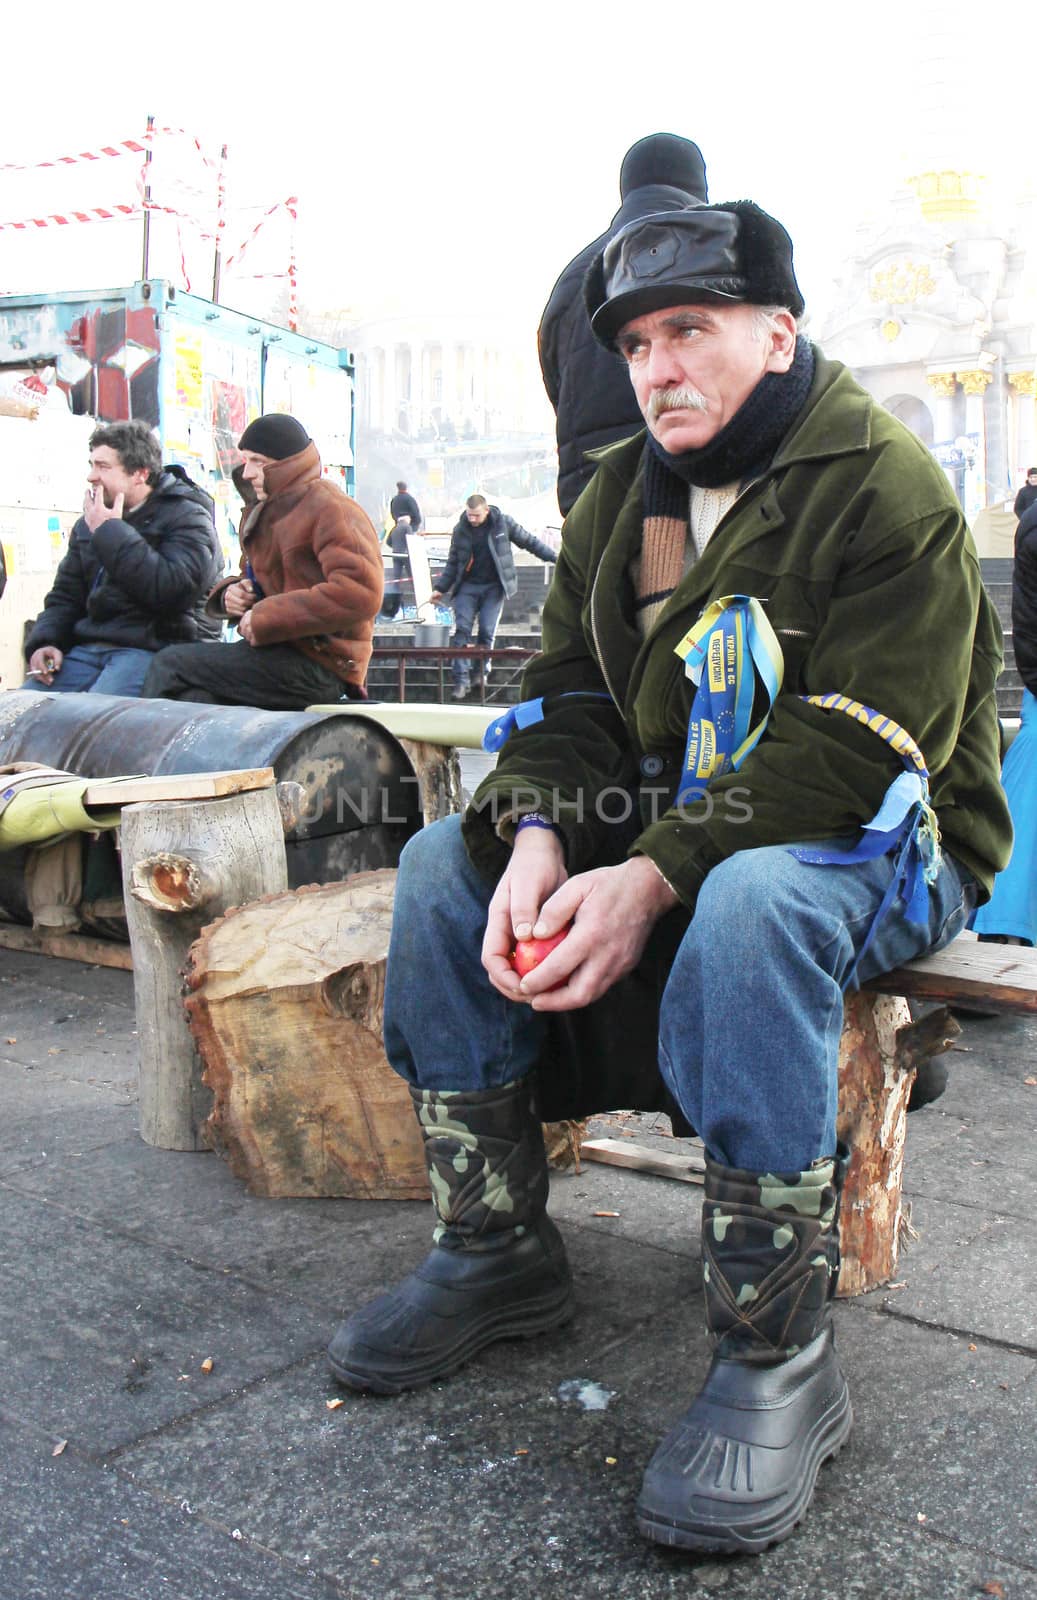 KIEV, UKRAINE - DECEMBER 24: Unidentified man during anti-governmental and pro-European integration protests on December 24, 2013 in Kiev, Ukraine